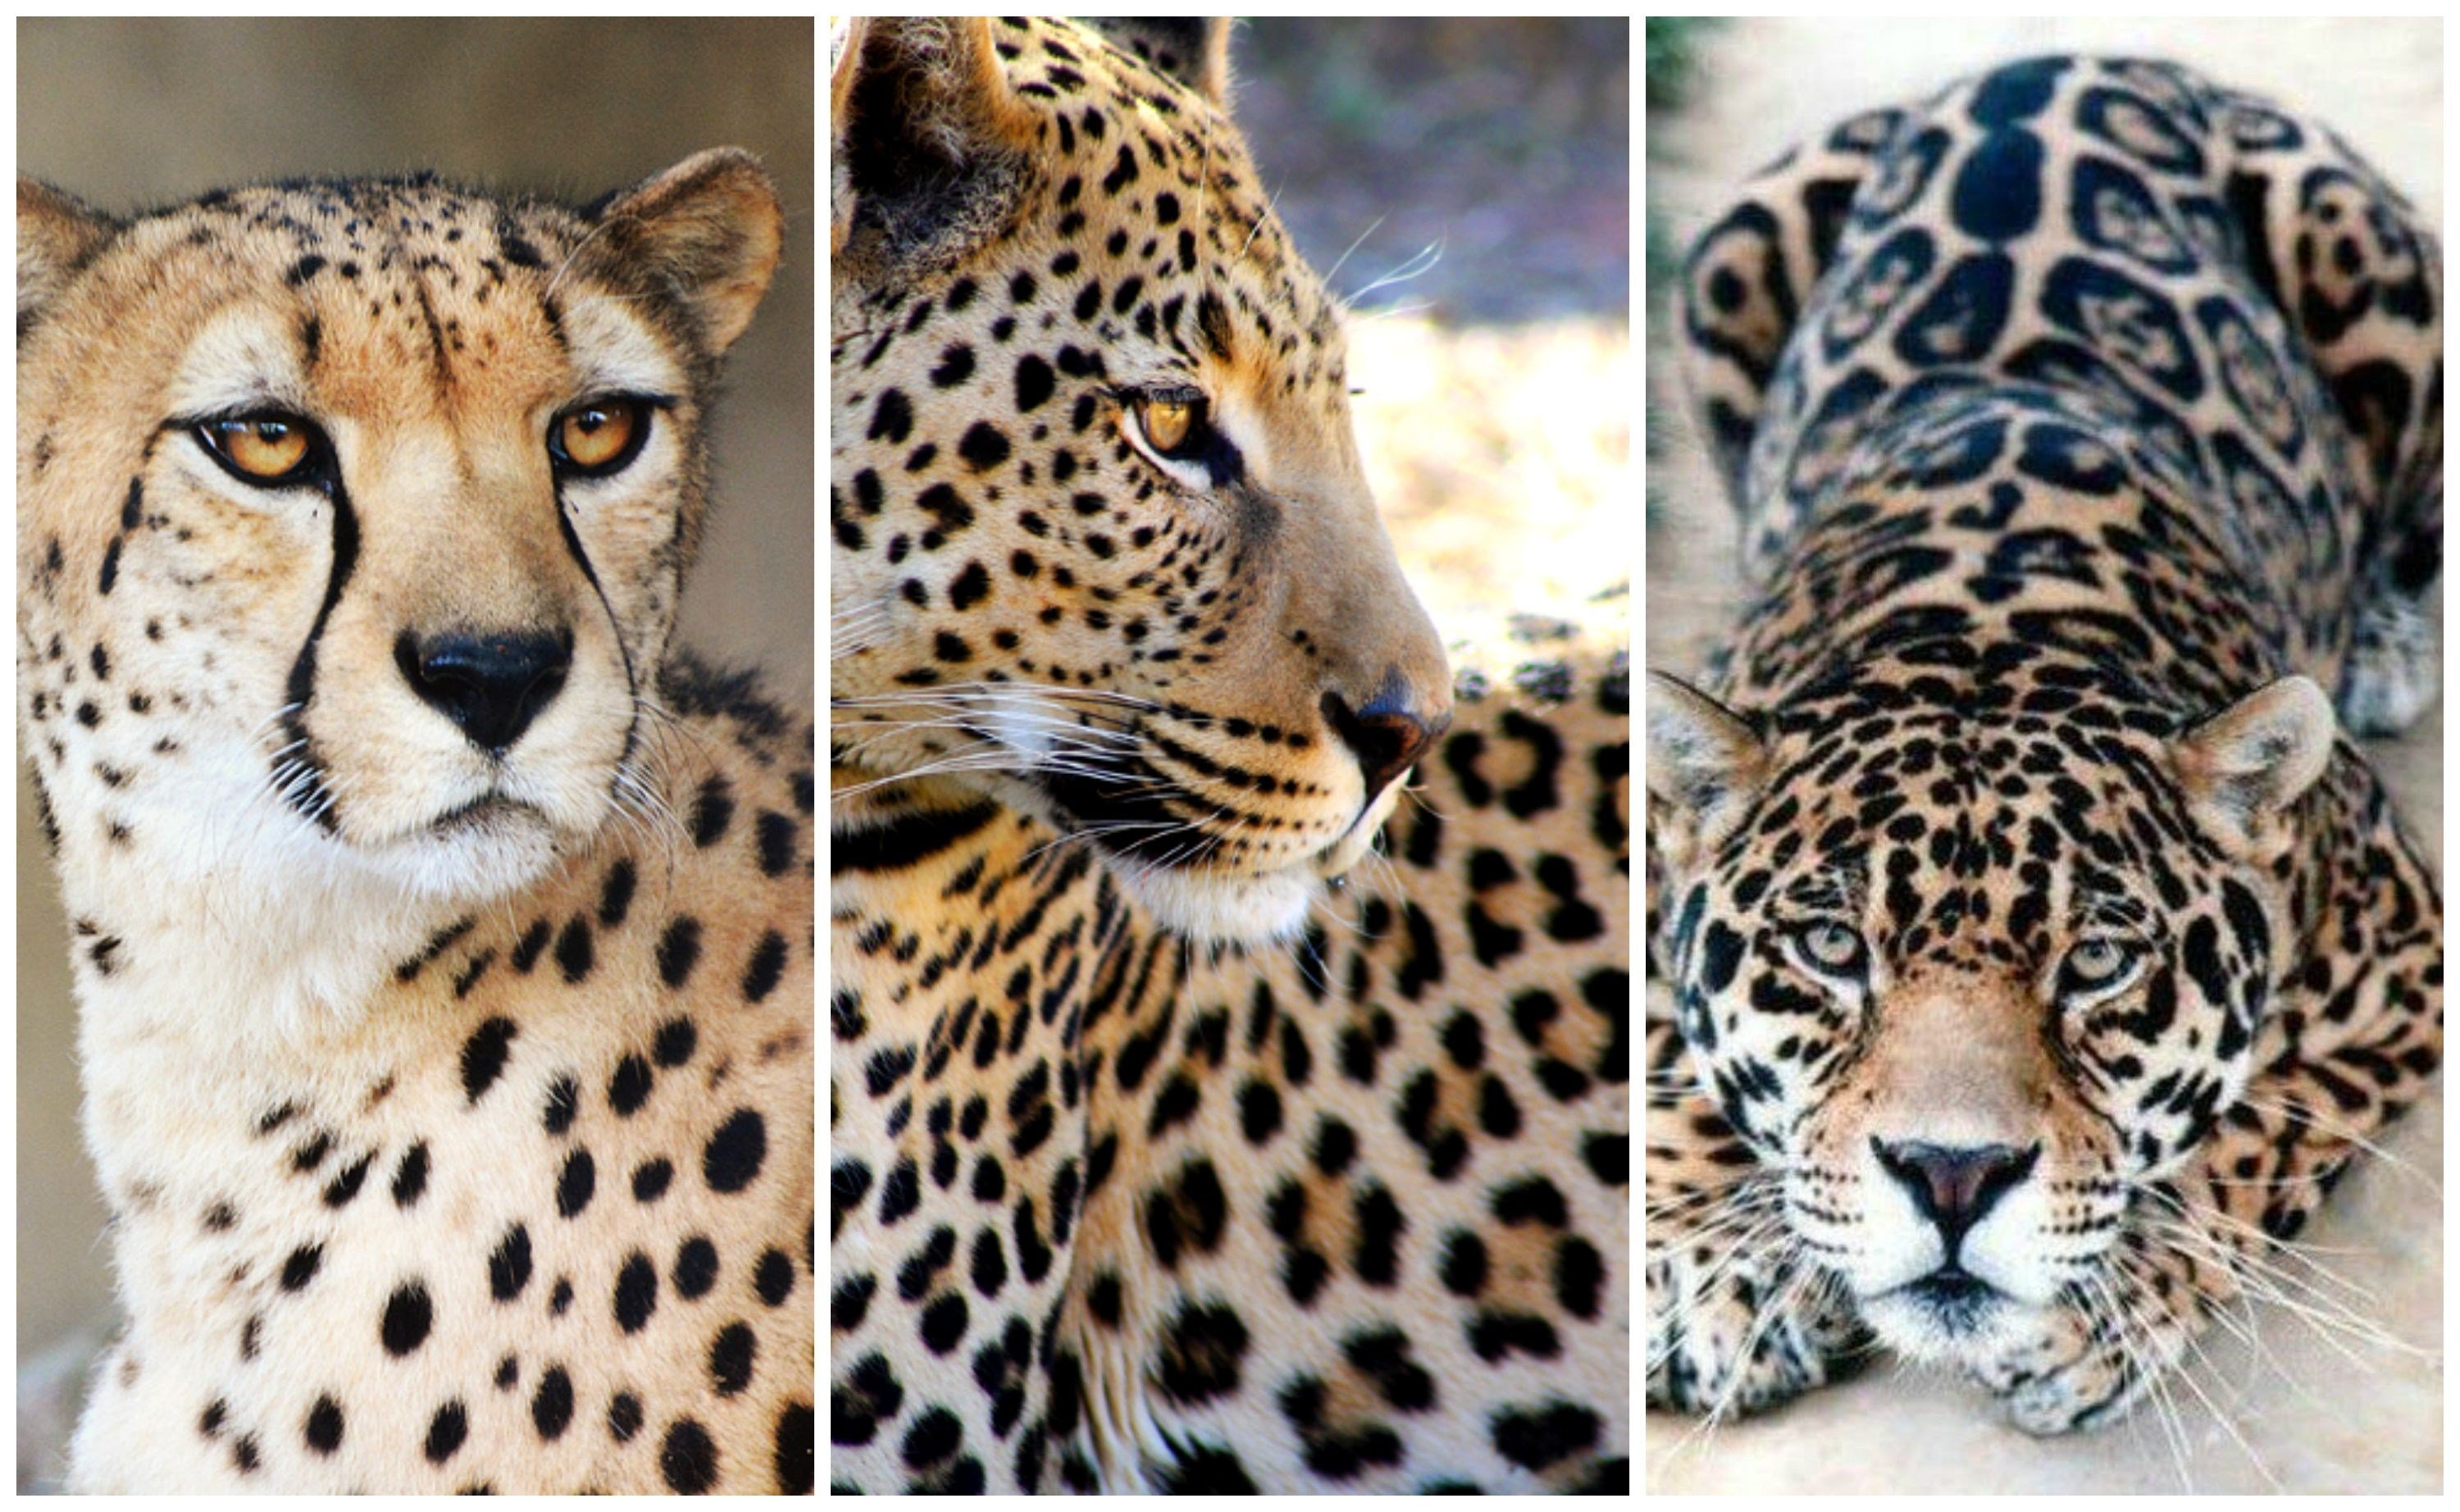 Леопард гепард ягуар пантера отличия